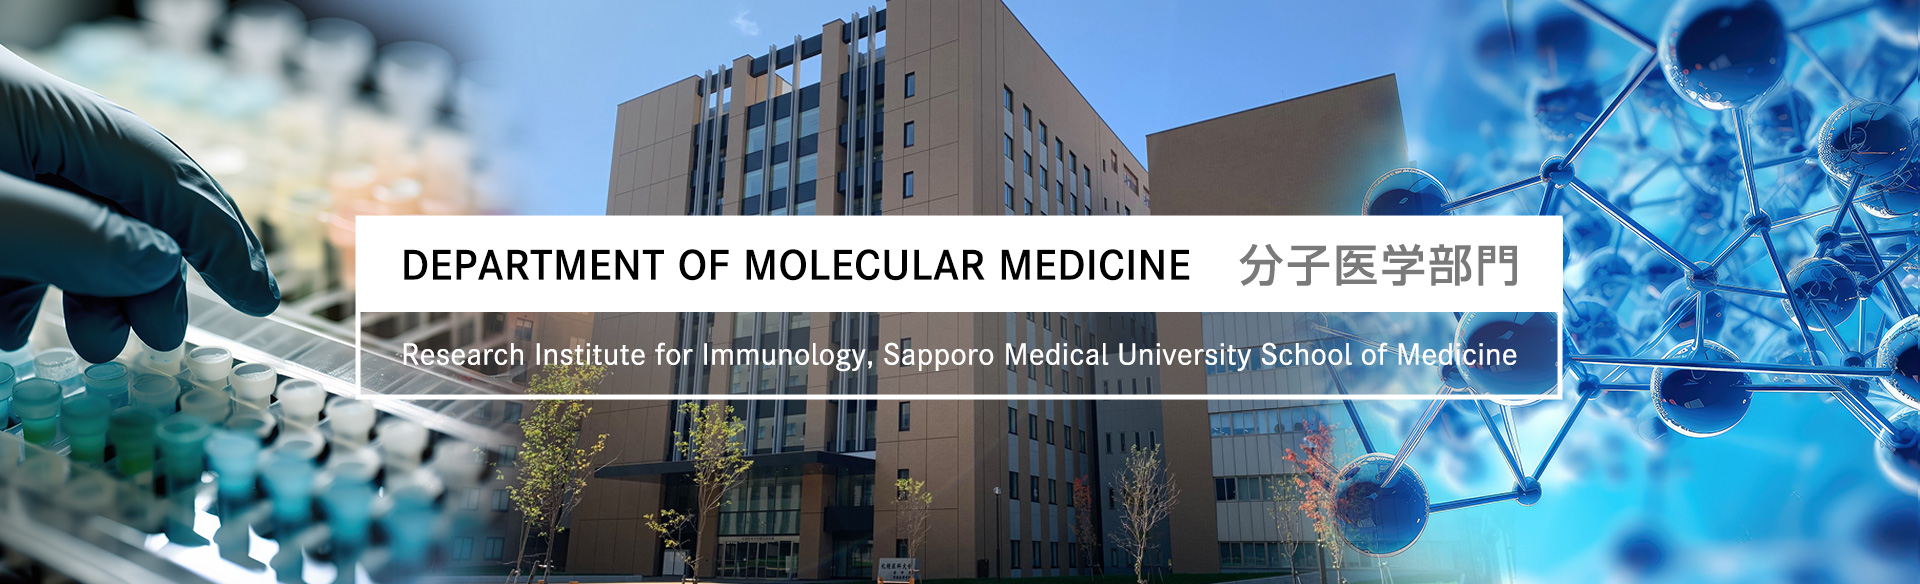 Department of Molecular MedicineҽѧT / Research Institute for Immunology, Sapporo Medical University School of Medicine